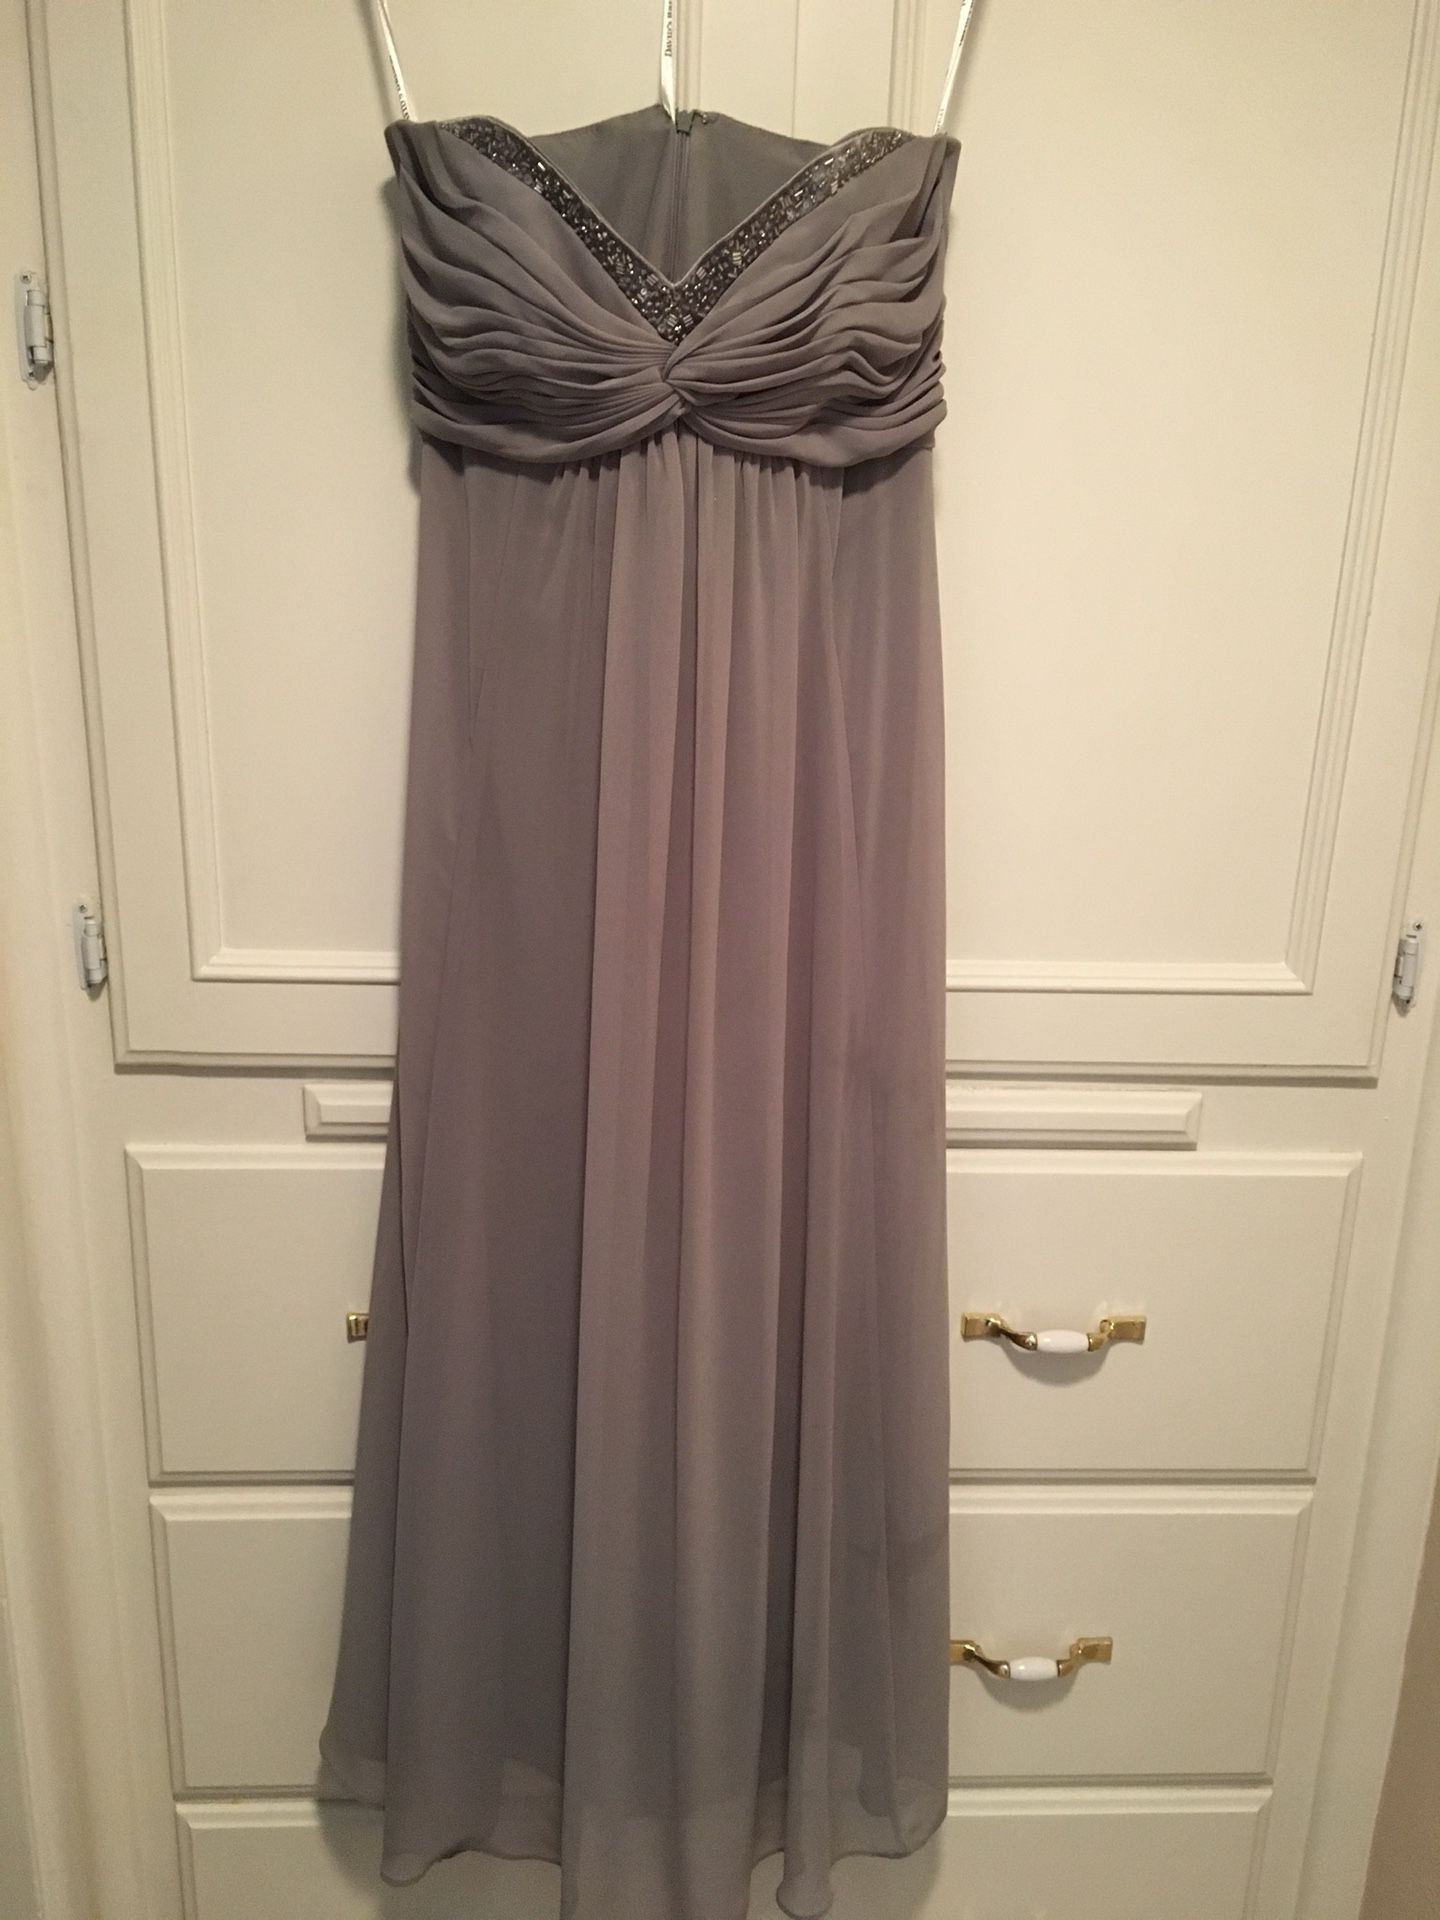 Teenager/woman’s lavender chiffon strapless dress/jeweled neckline size 4-6